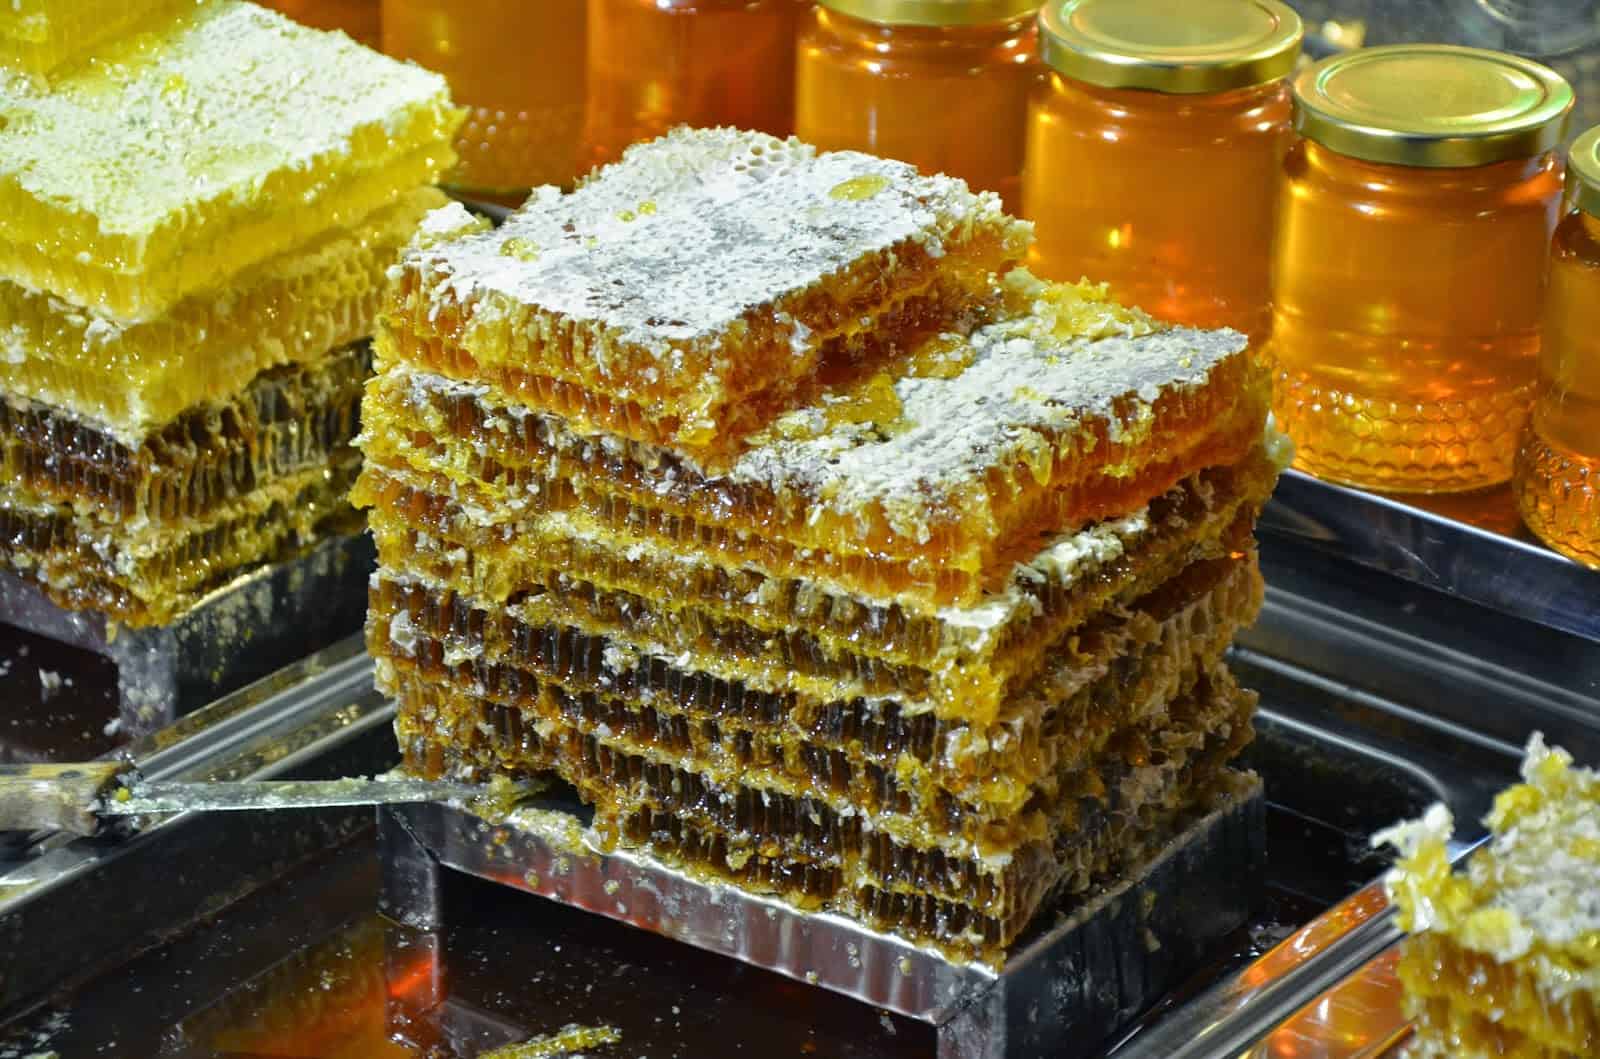 Honeycomb at the food market in Bursa, Turkey